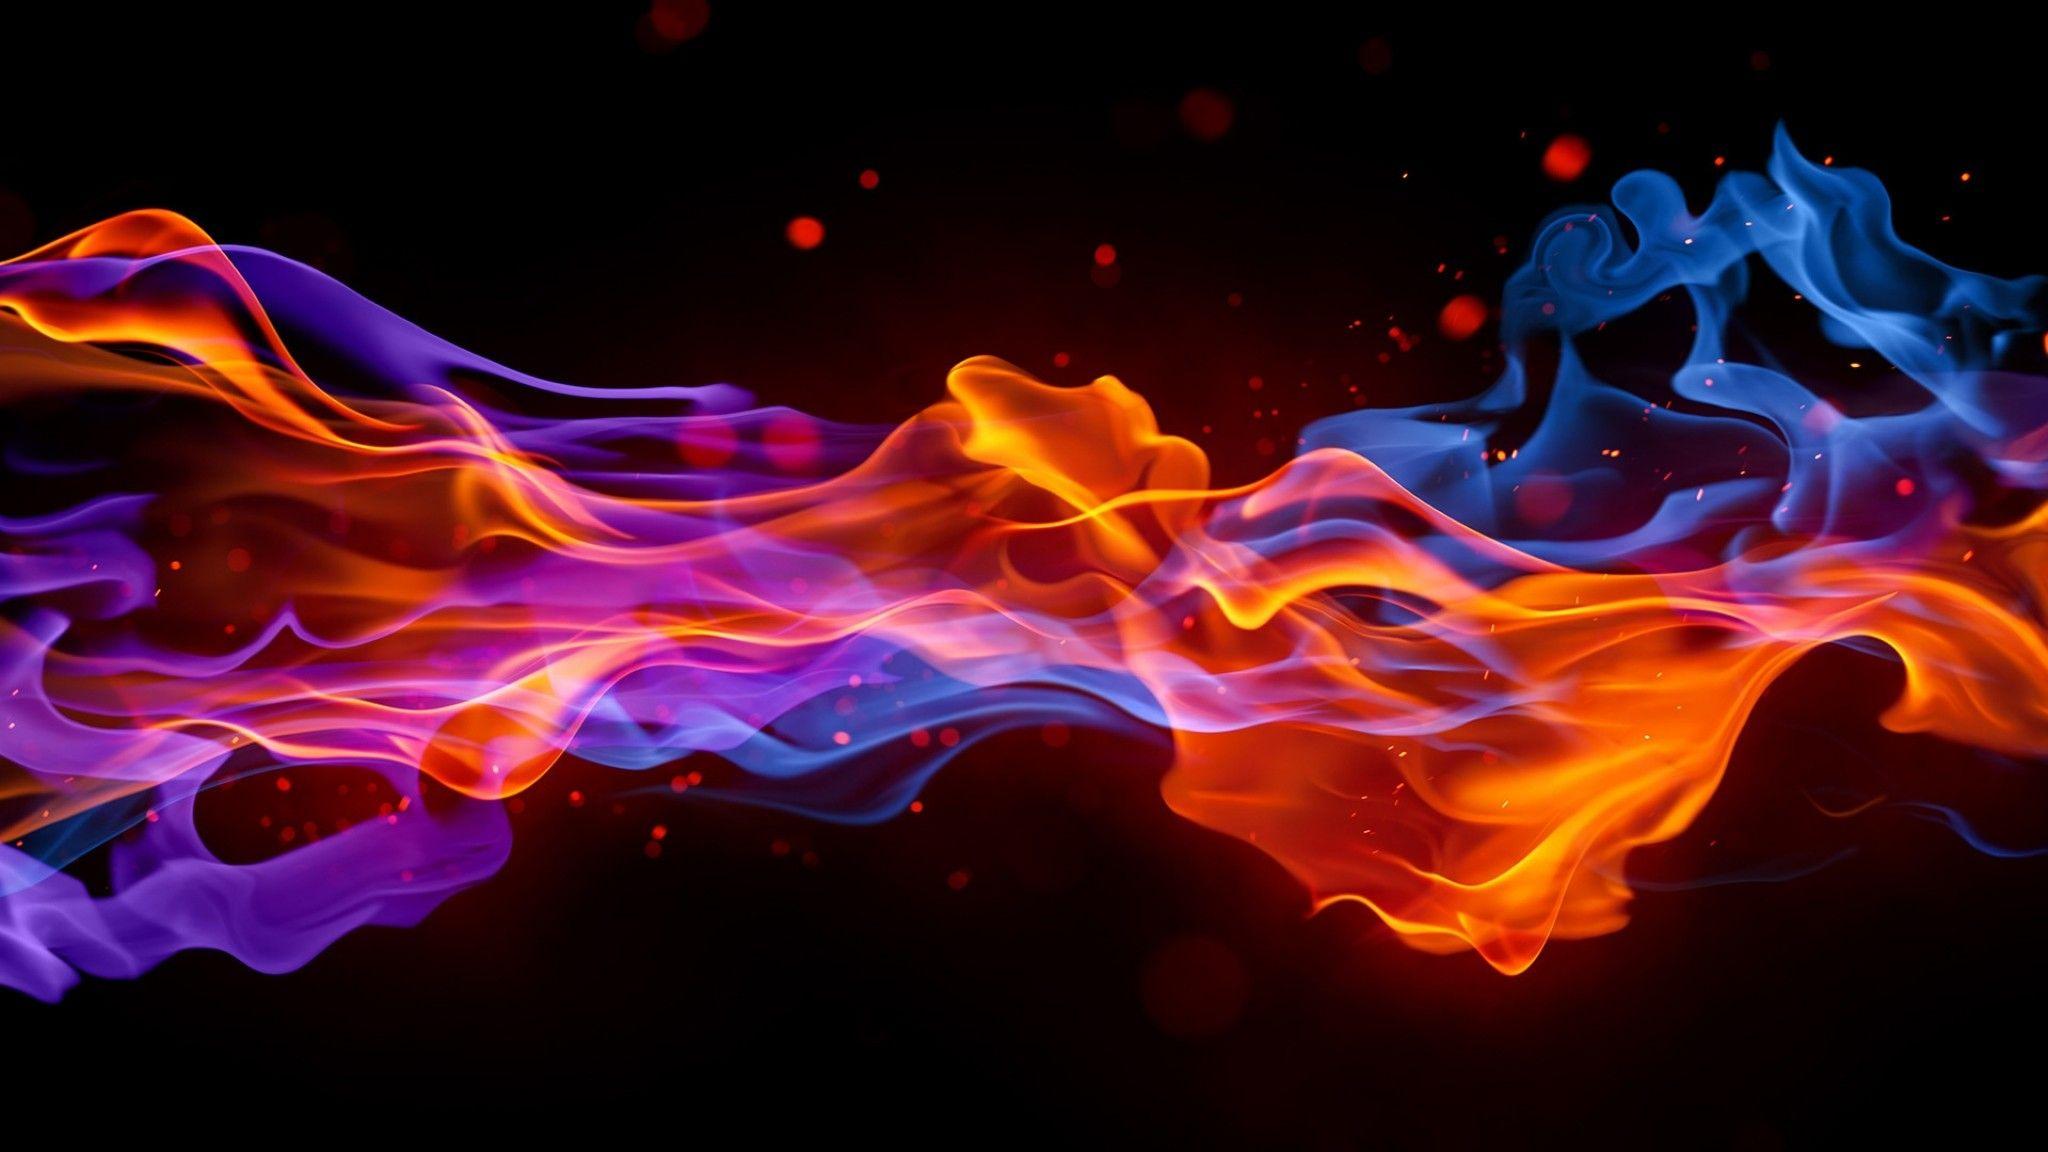 Fire Wallpapers Free HD Download 500 HQ  Unsplash